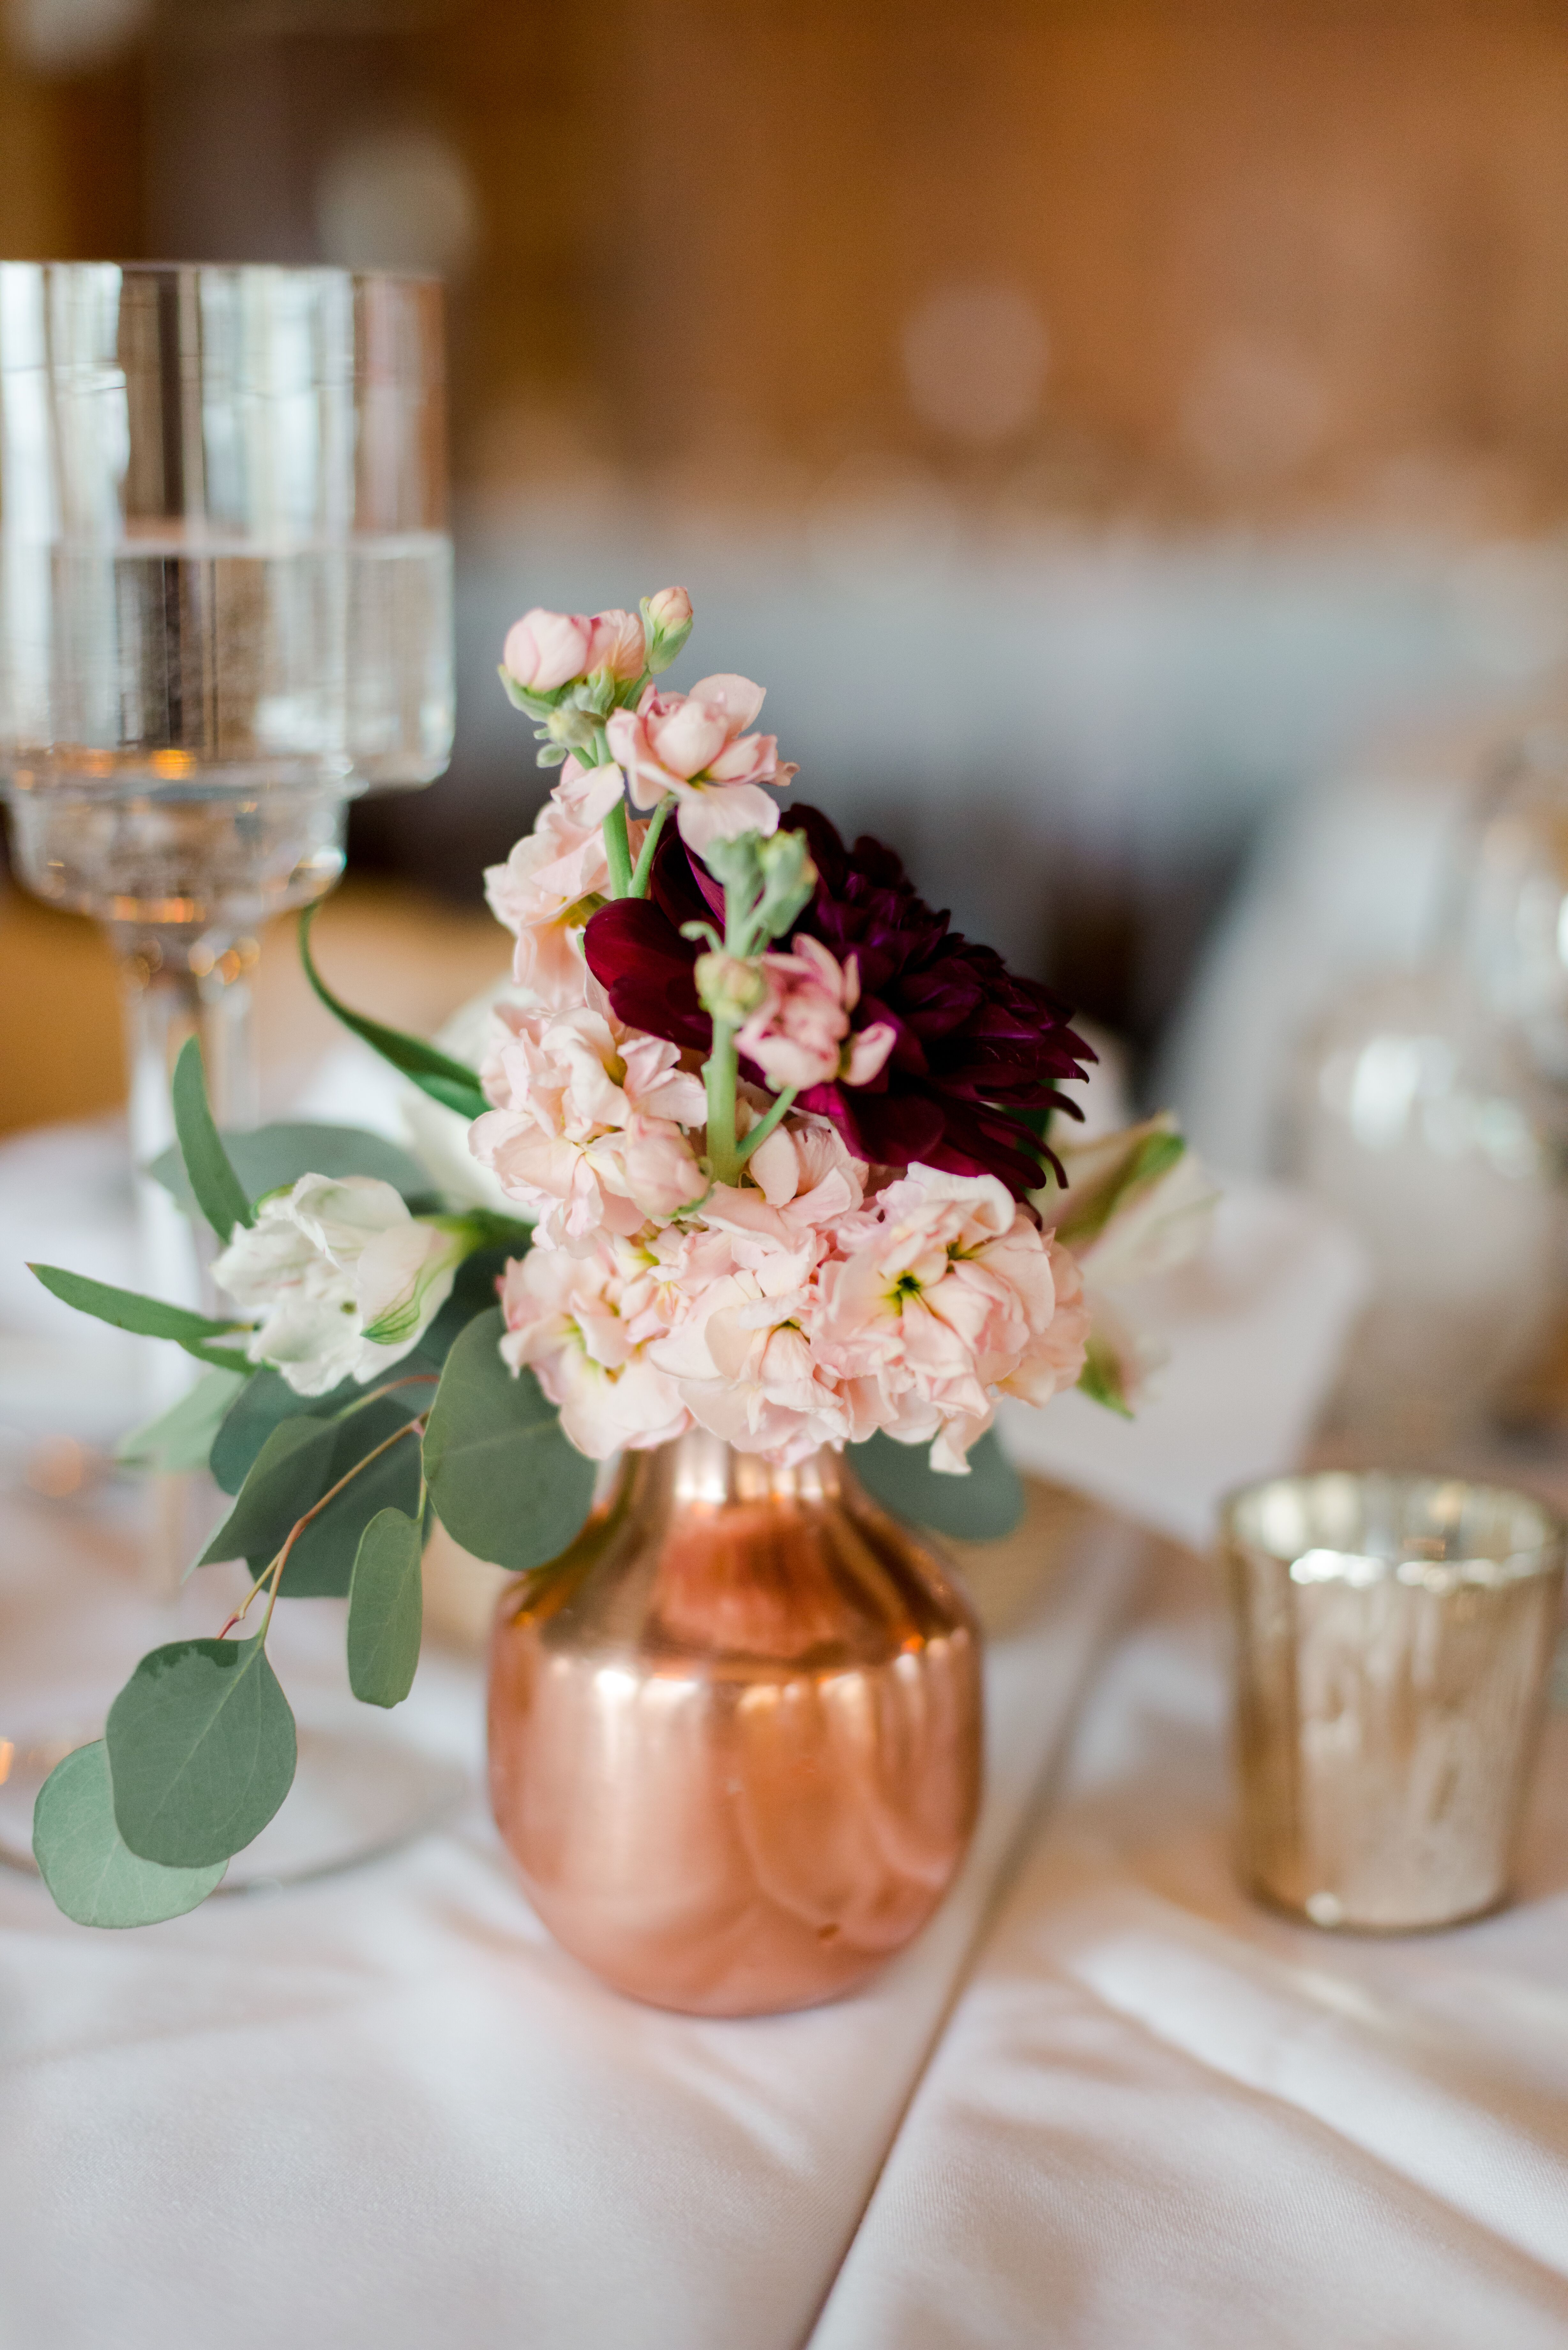 rose gold vase with eucalyptus pink blossoms and burgundy dahlia photo context=eucalyptus wedding flower arrangements photos&page=2